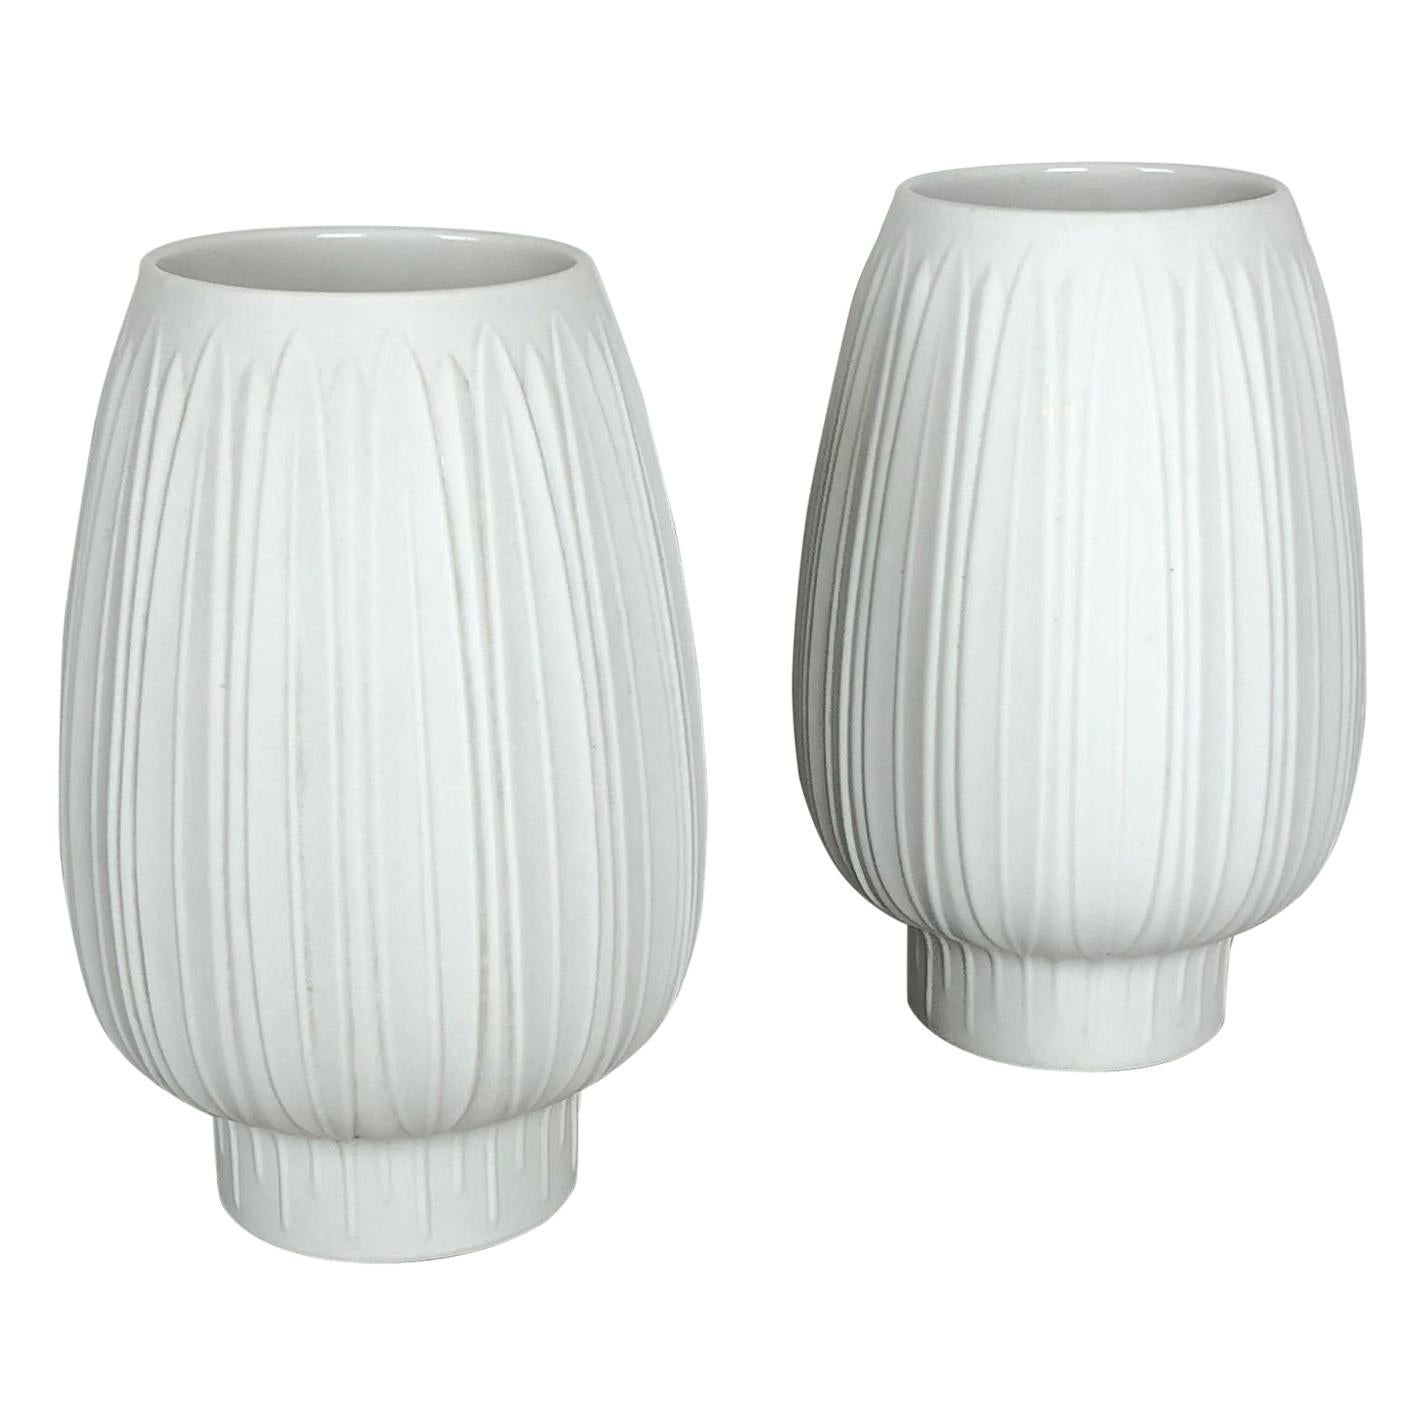 Set of 2 Porcelain Op Art "Artichoke" Vase by Heinrich Selb, Germany, 1970s